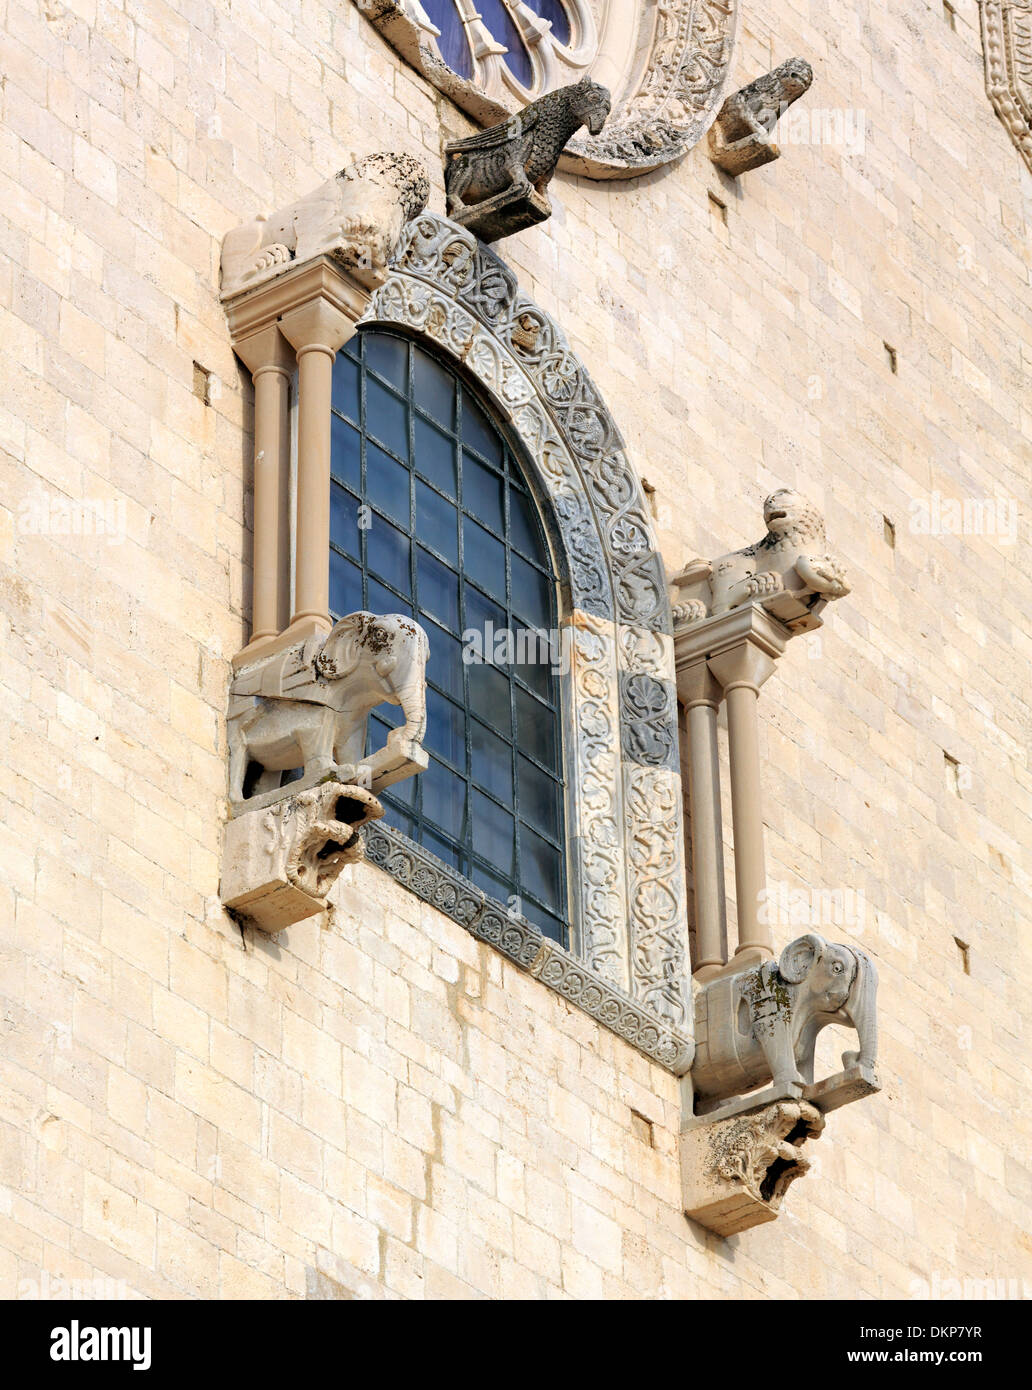 Alter Dom (Duomo di San Corrado), Molfetta, Apulien, Italien Stockfoto